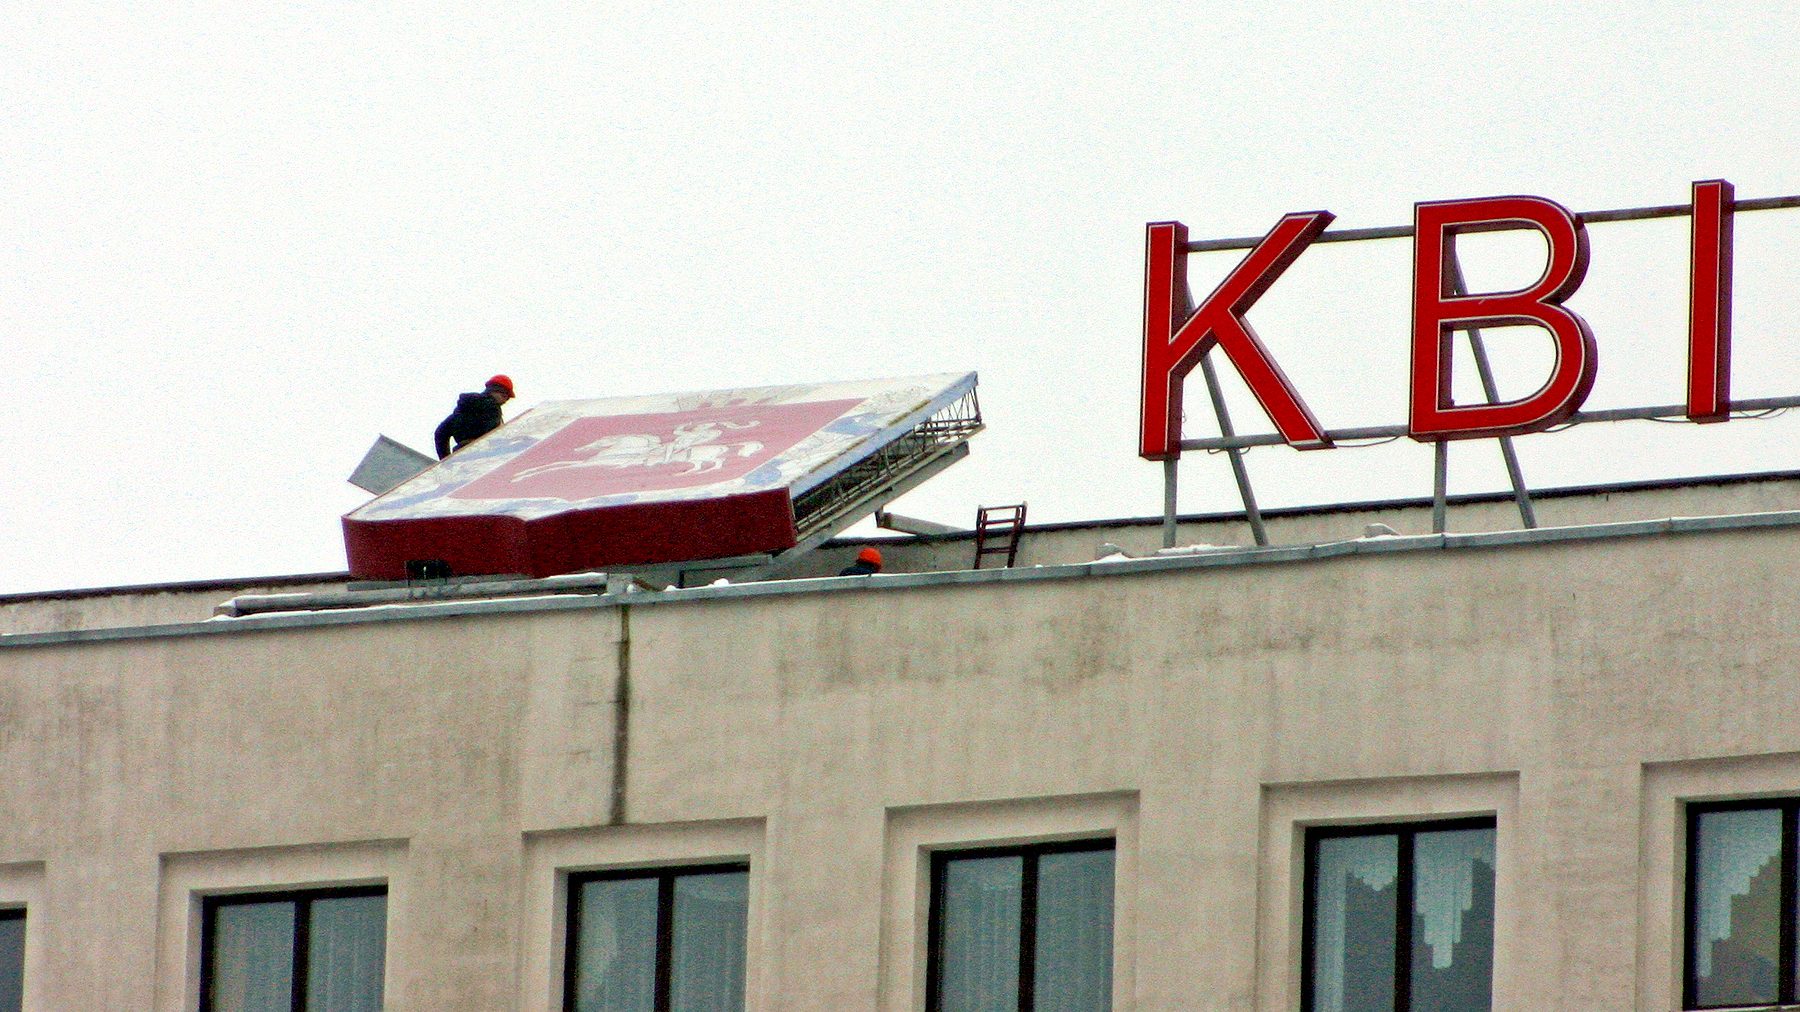 Демонтаж герба «Погоня» со здания в центре Витебска. Фото Павла Максимова